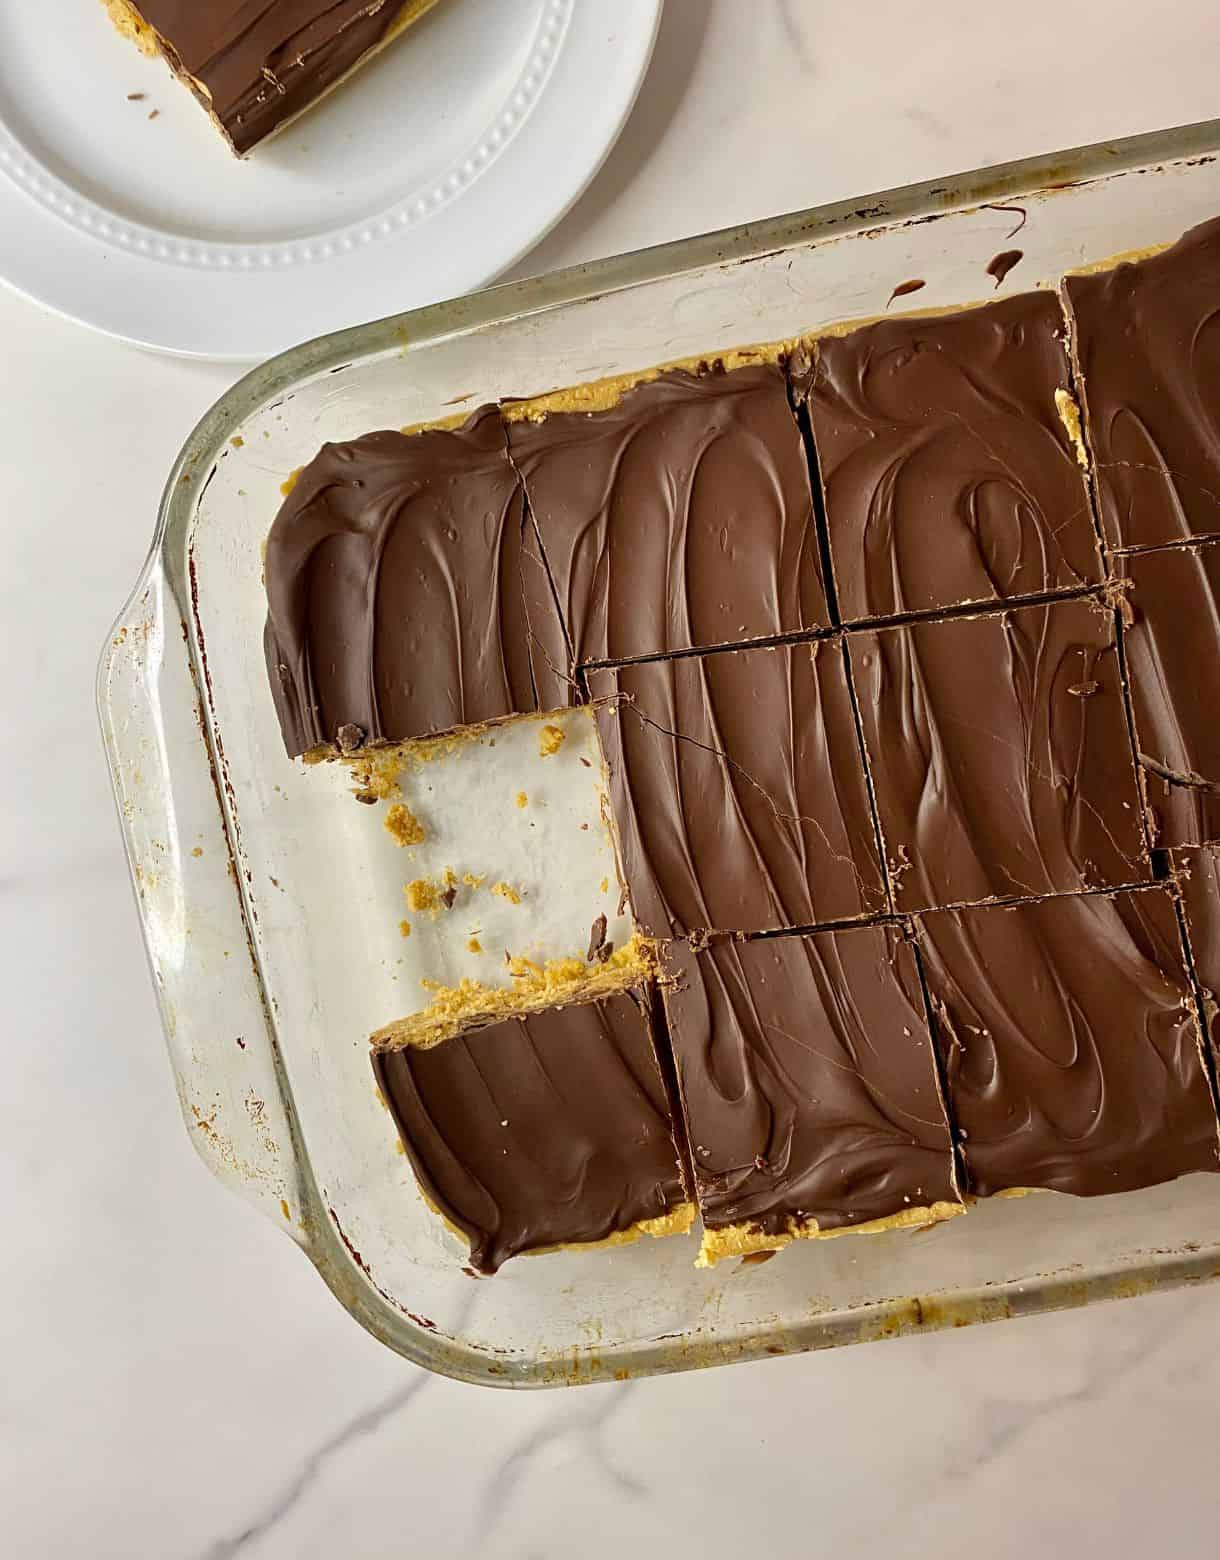 A pan of No-Bake Chocolate Peanut Butter Bars.